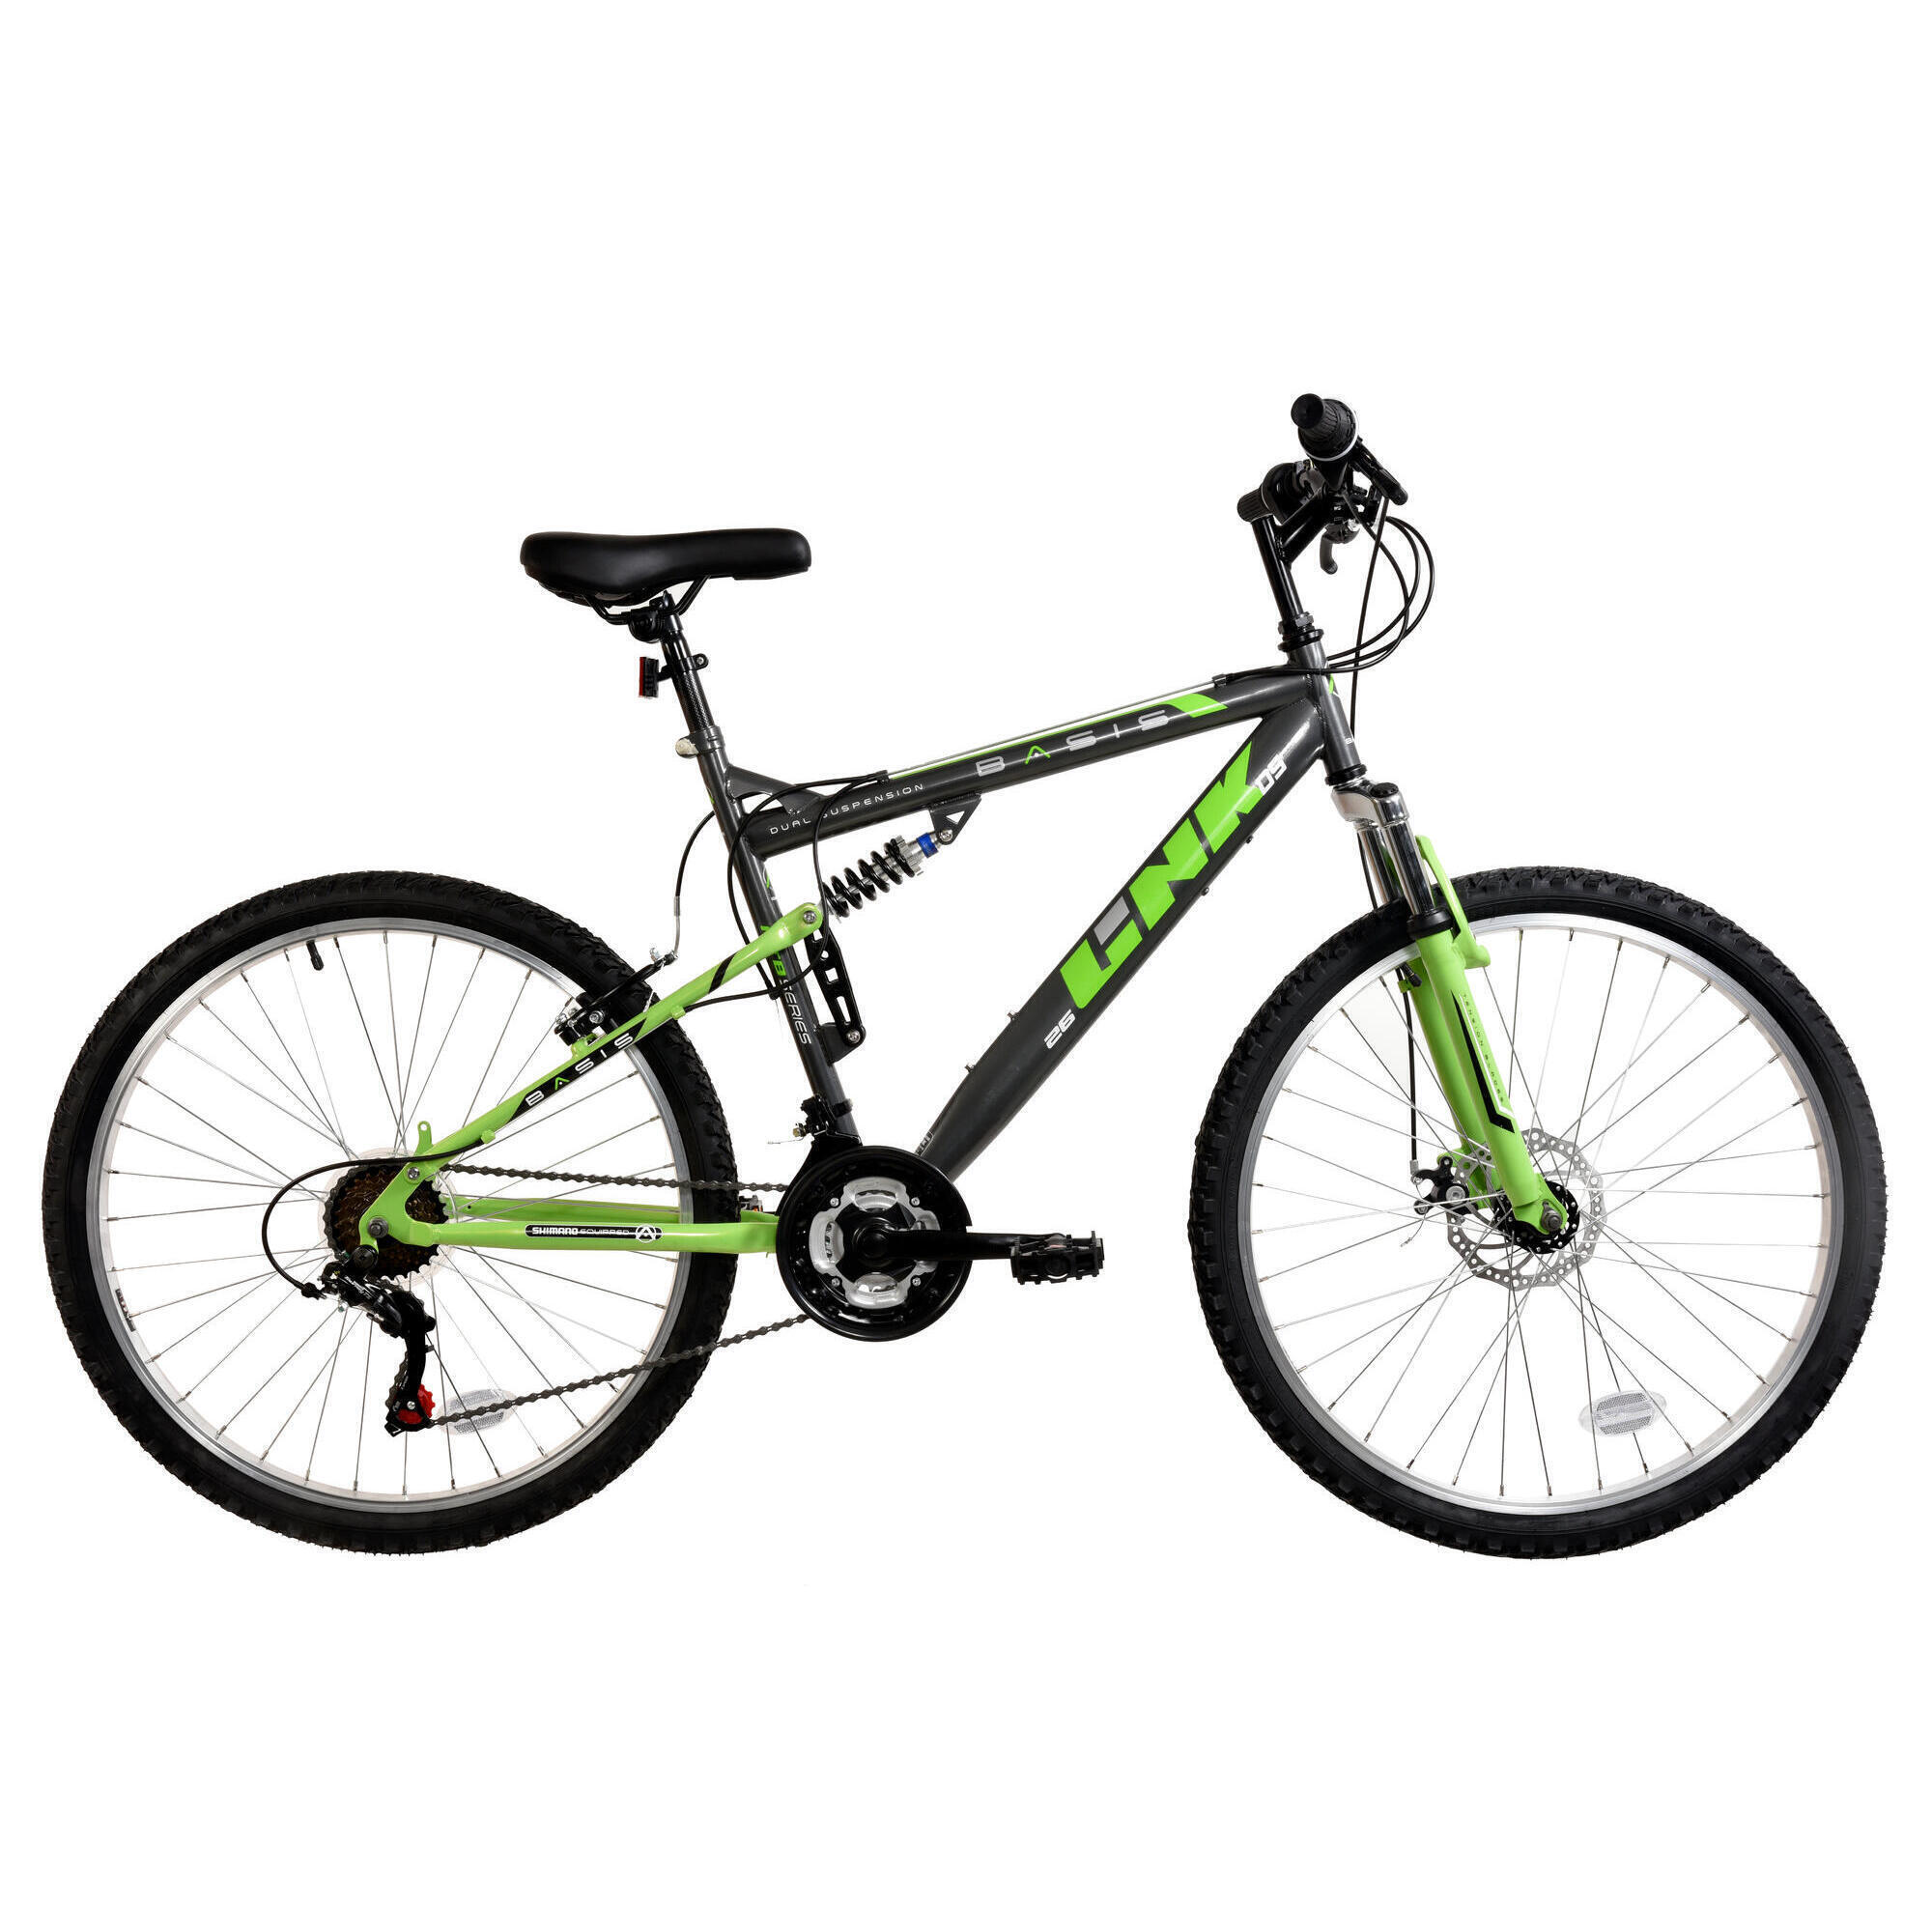 BASIS Basis Link Adult's Full Suspension Mountain Bike, 26In Wheel - Graphite/Lime